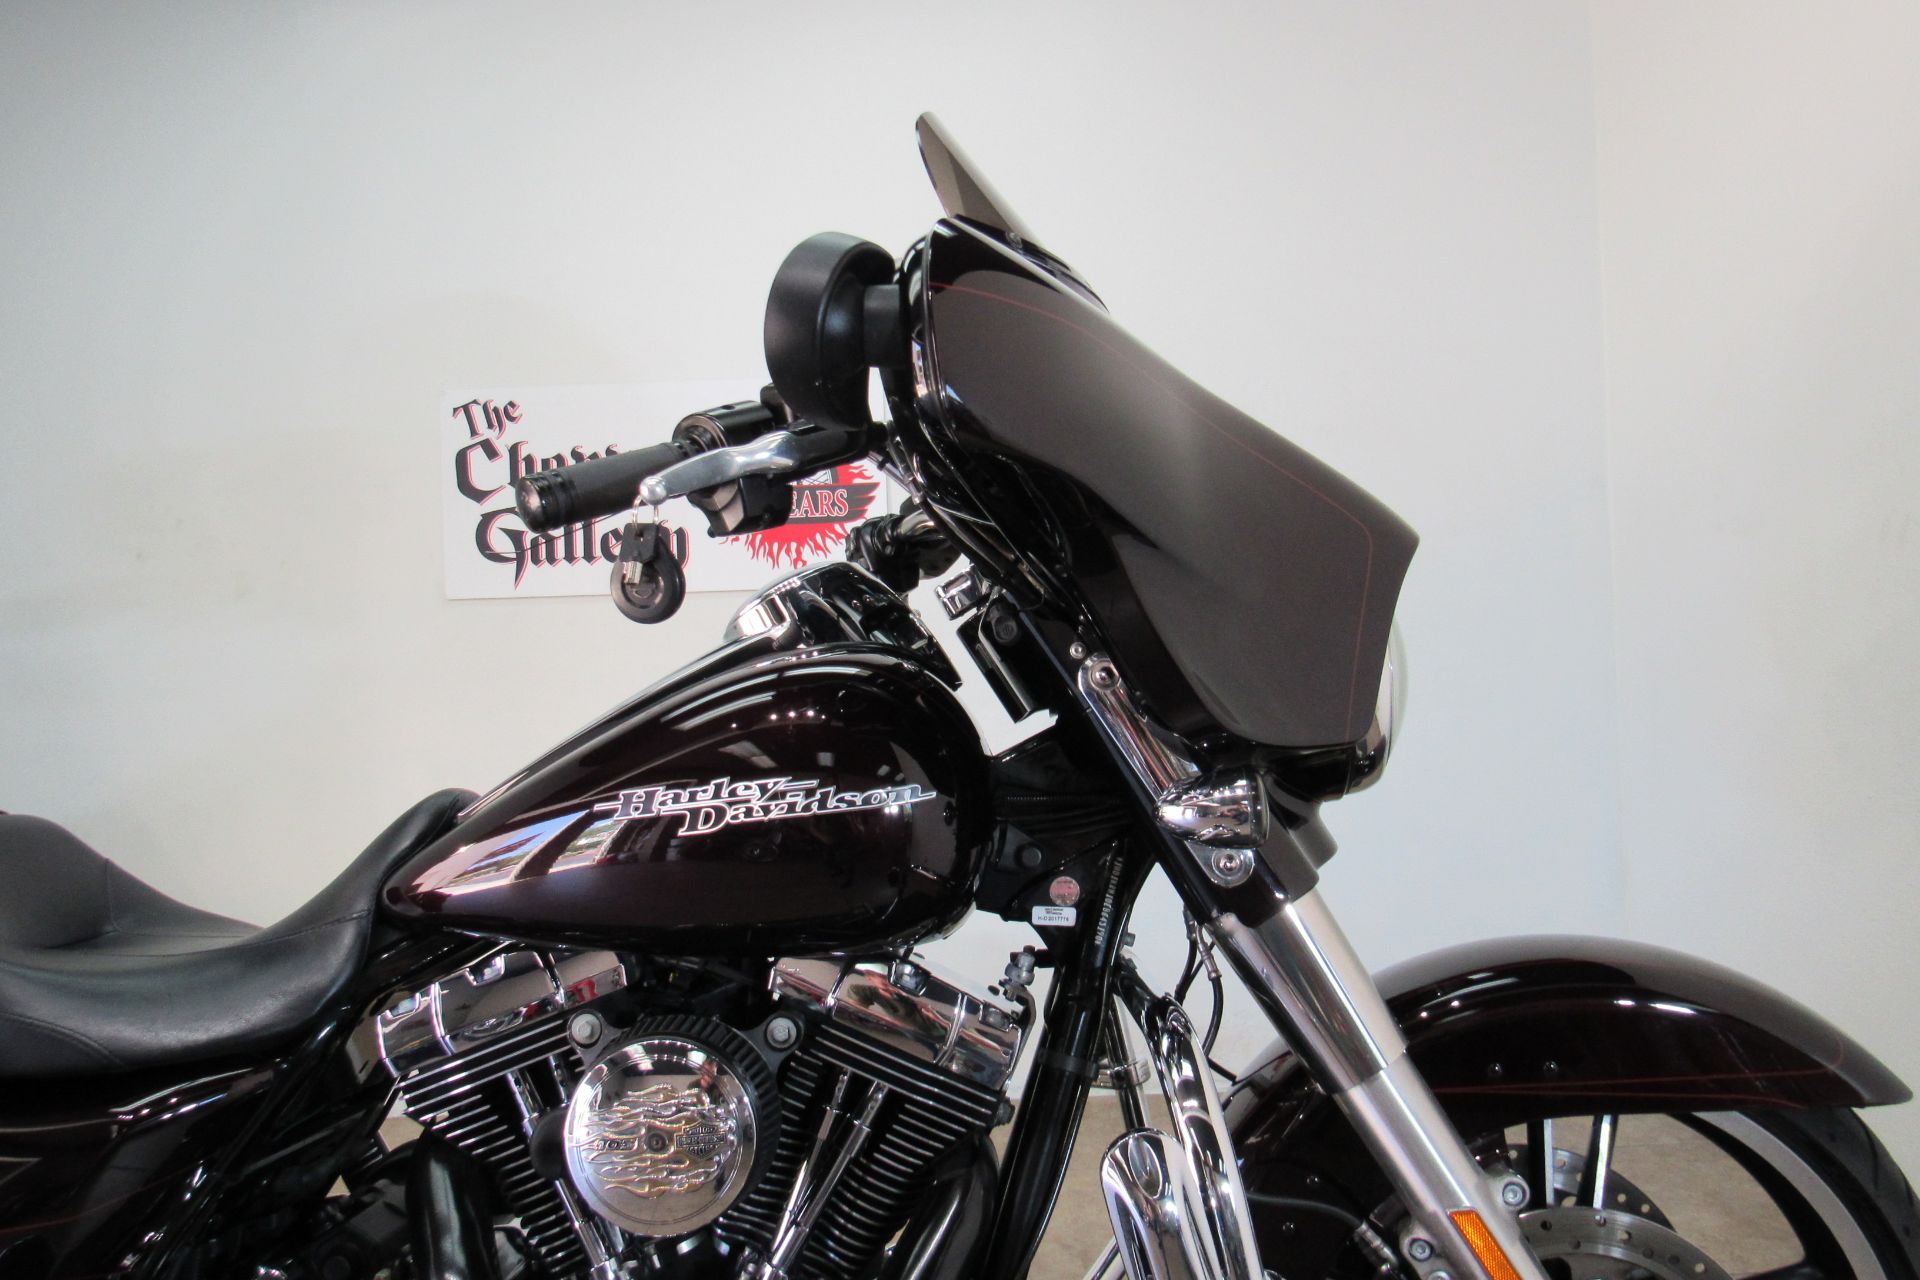 2014 Harley-Davidson Street Glide® Special in Temecula, California - Photo 7